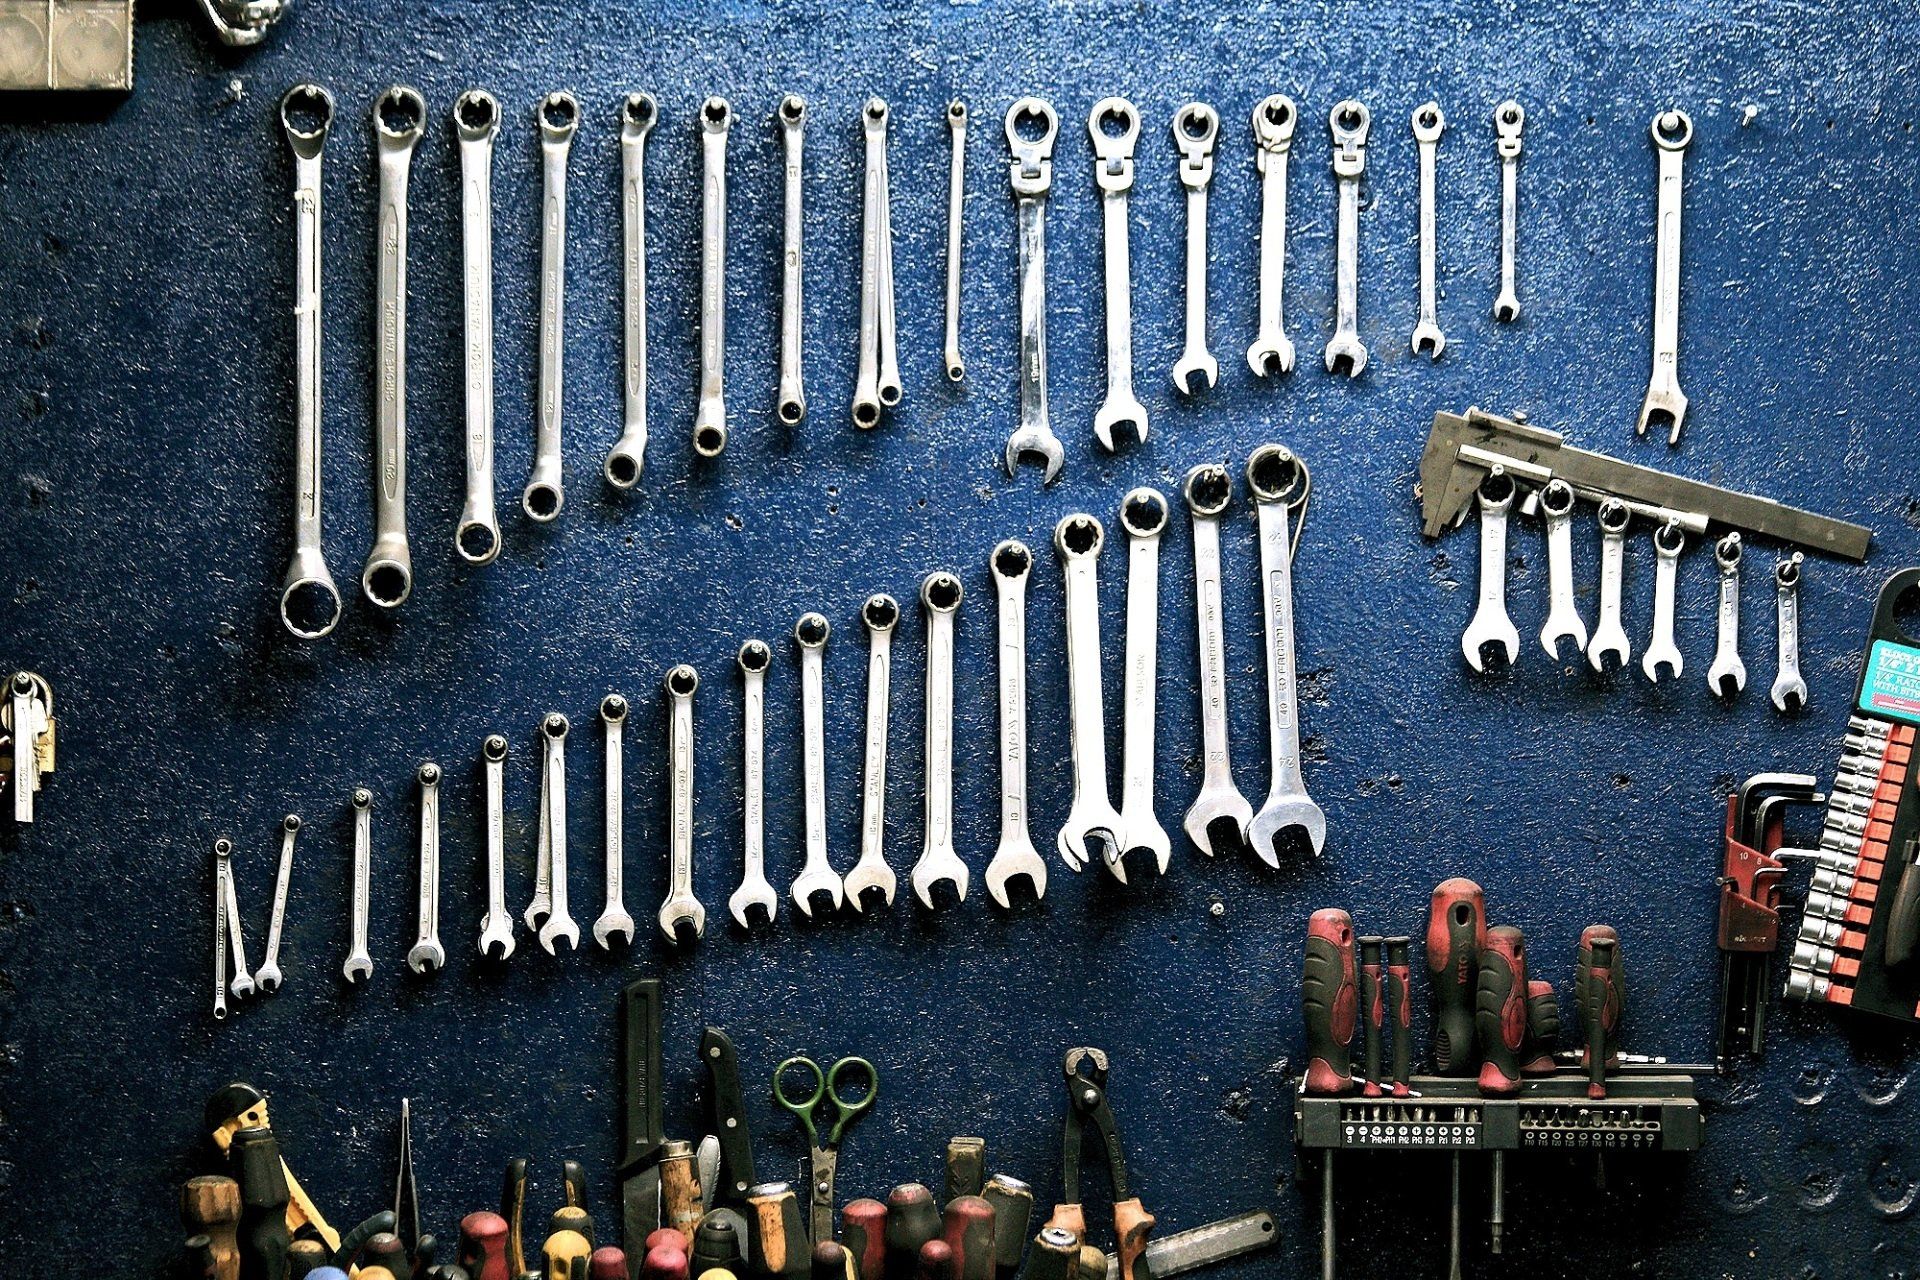 diy tool reviews and how-to repairs